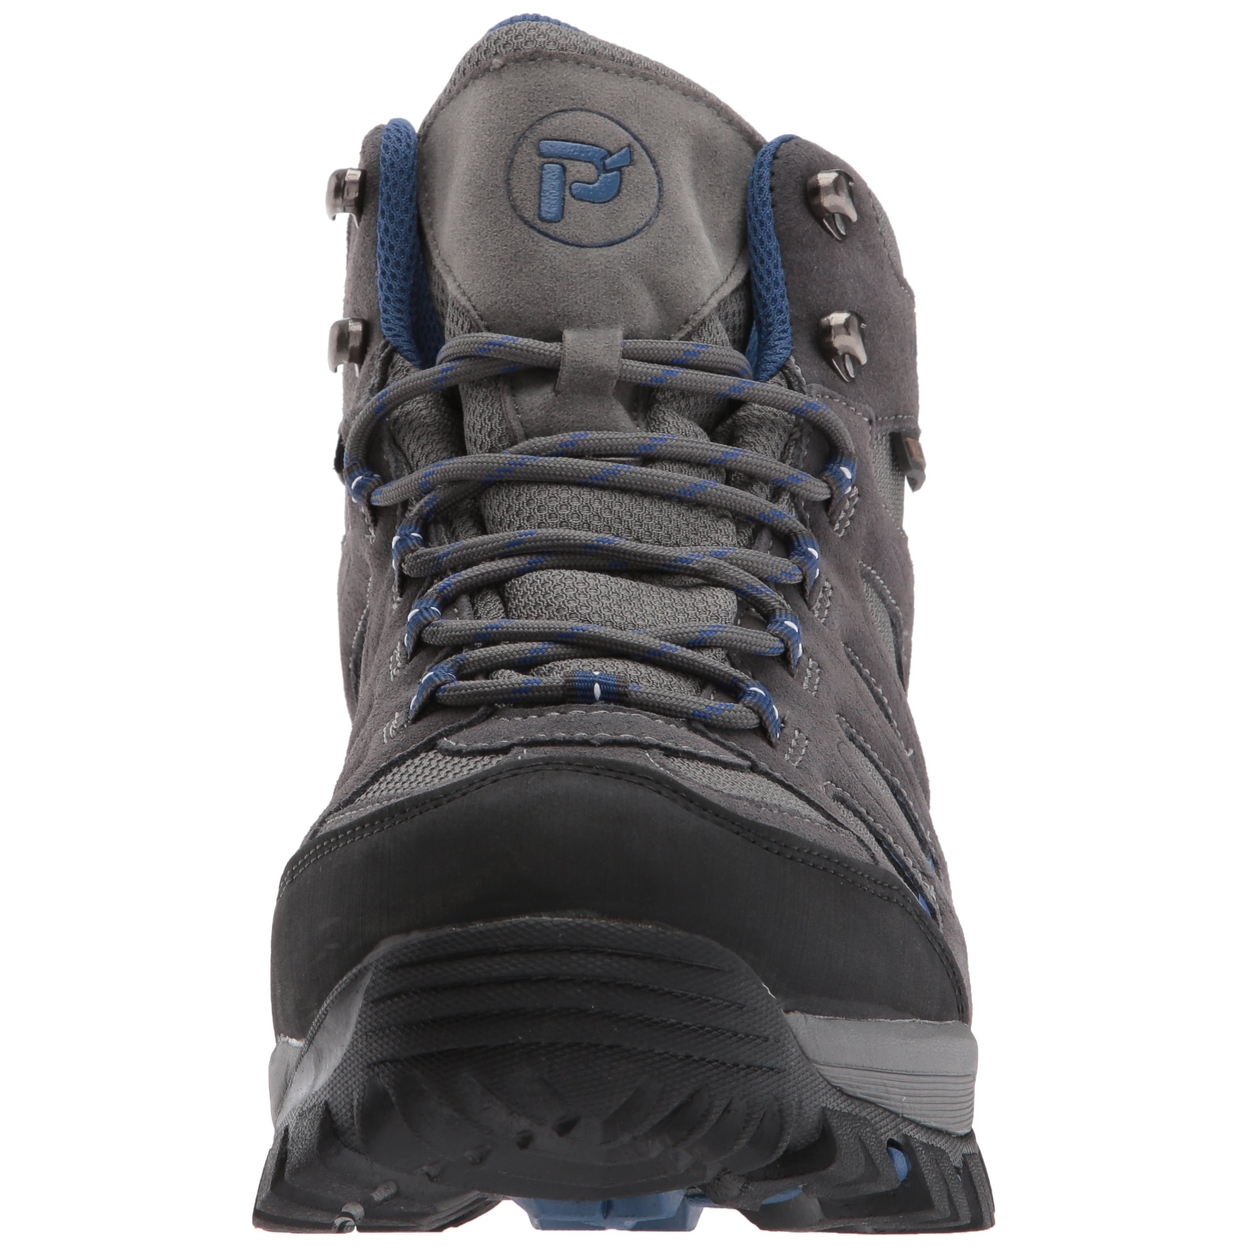 Propet Men's Ridge Walker Hiking Boot Grey/Blue - M3599GRB GREY/BLUE - GREY/BLUE, 14-E